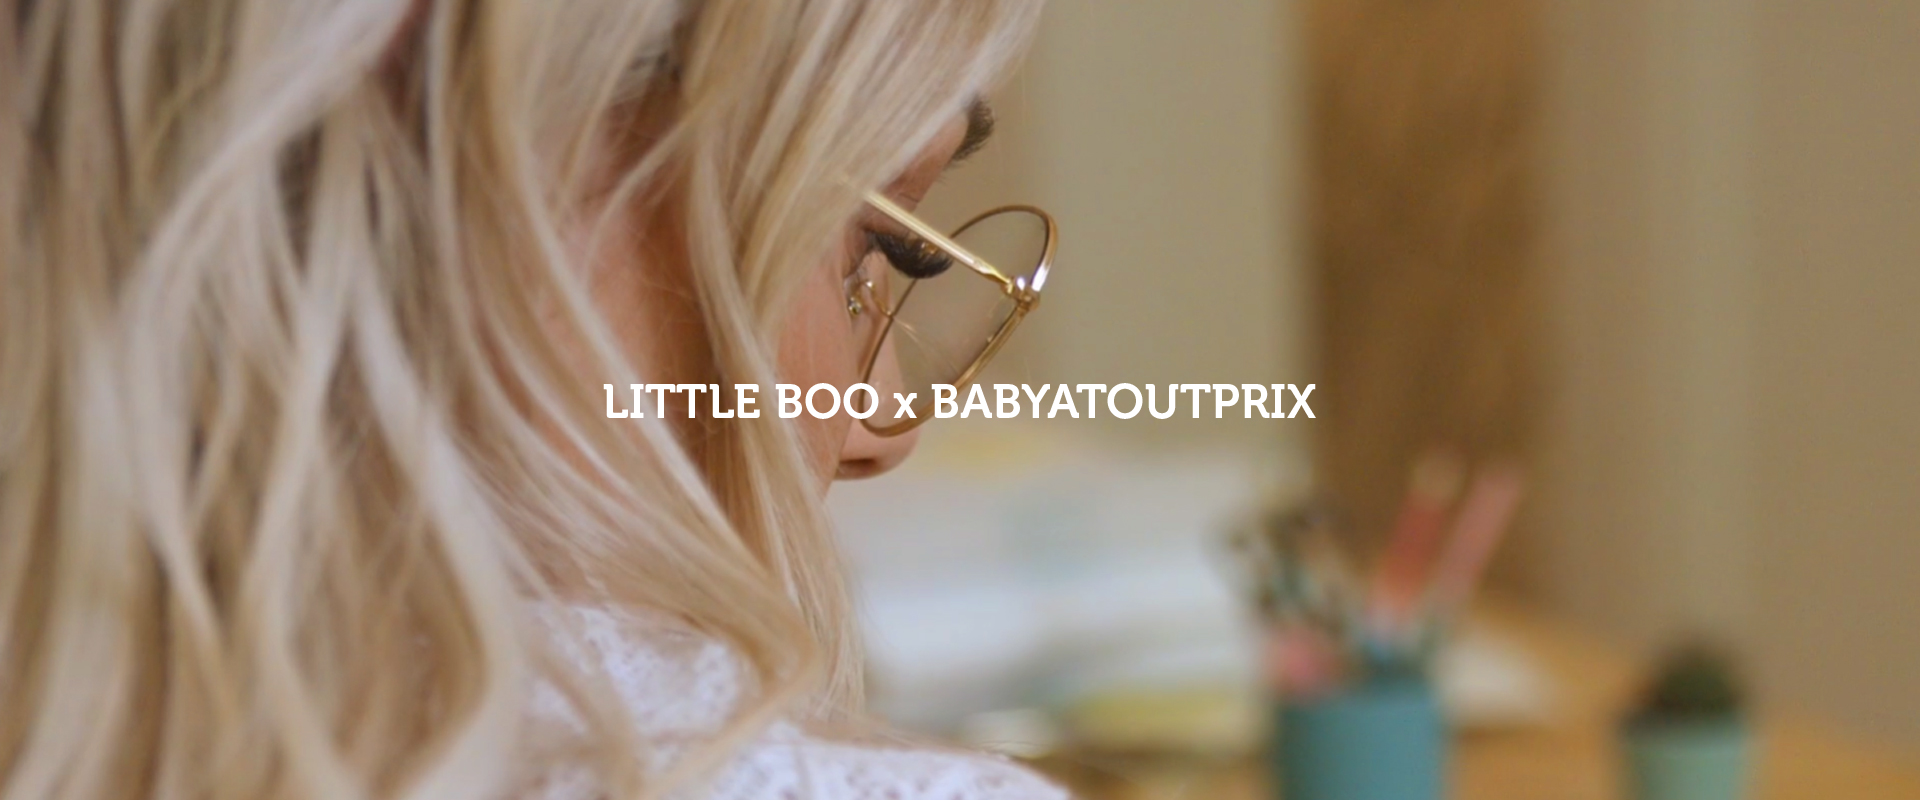 Babyatoutprix x Little Boo